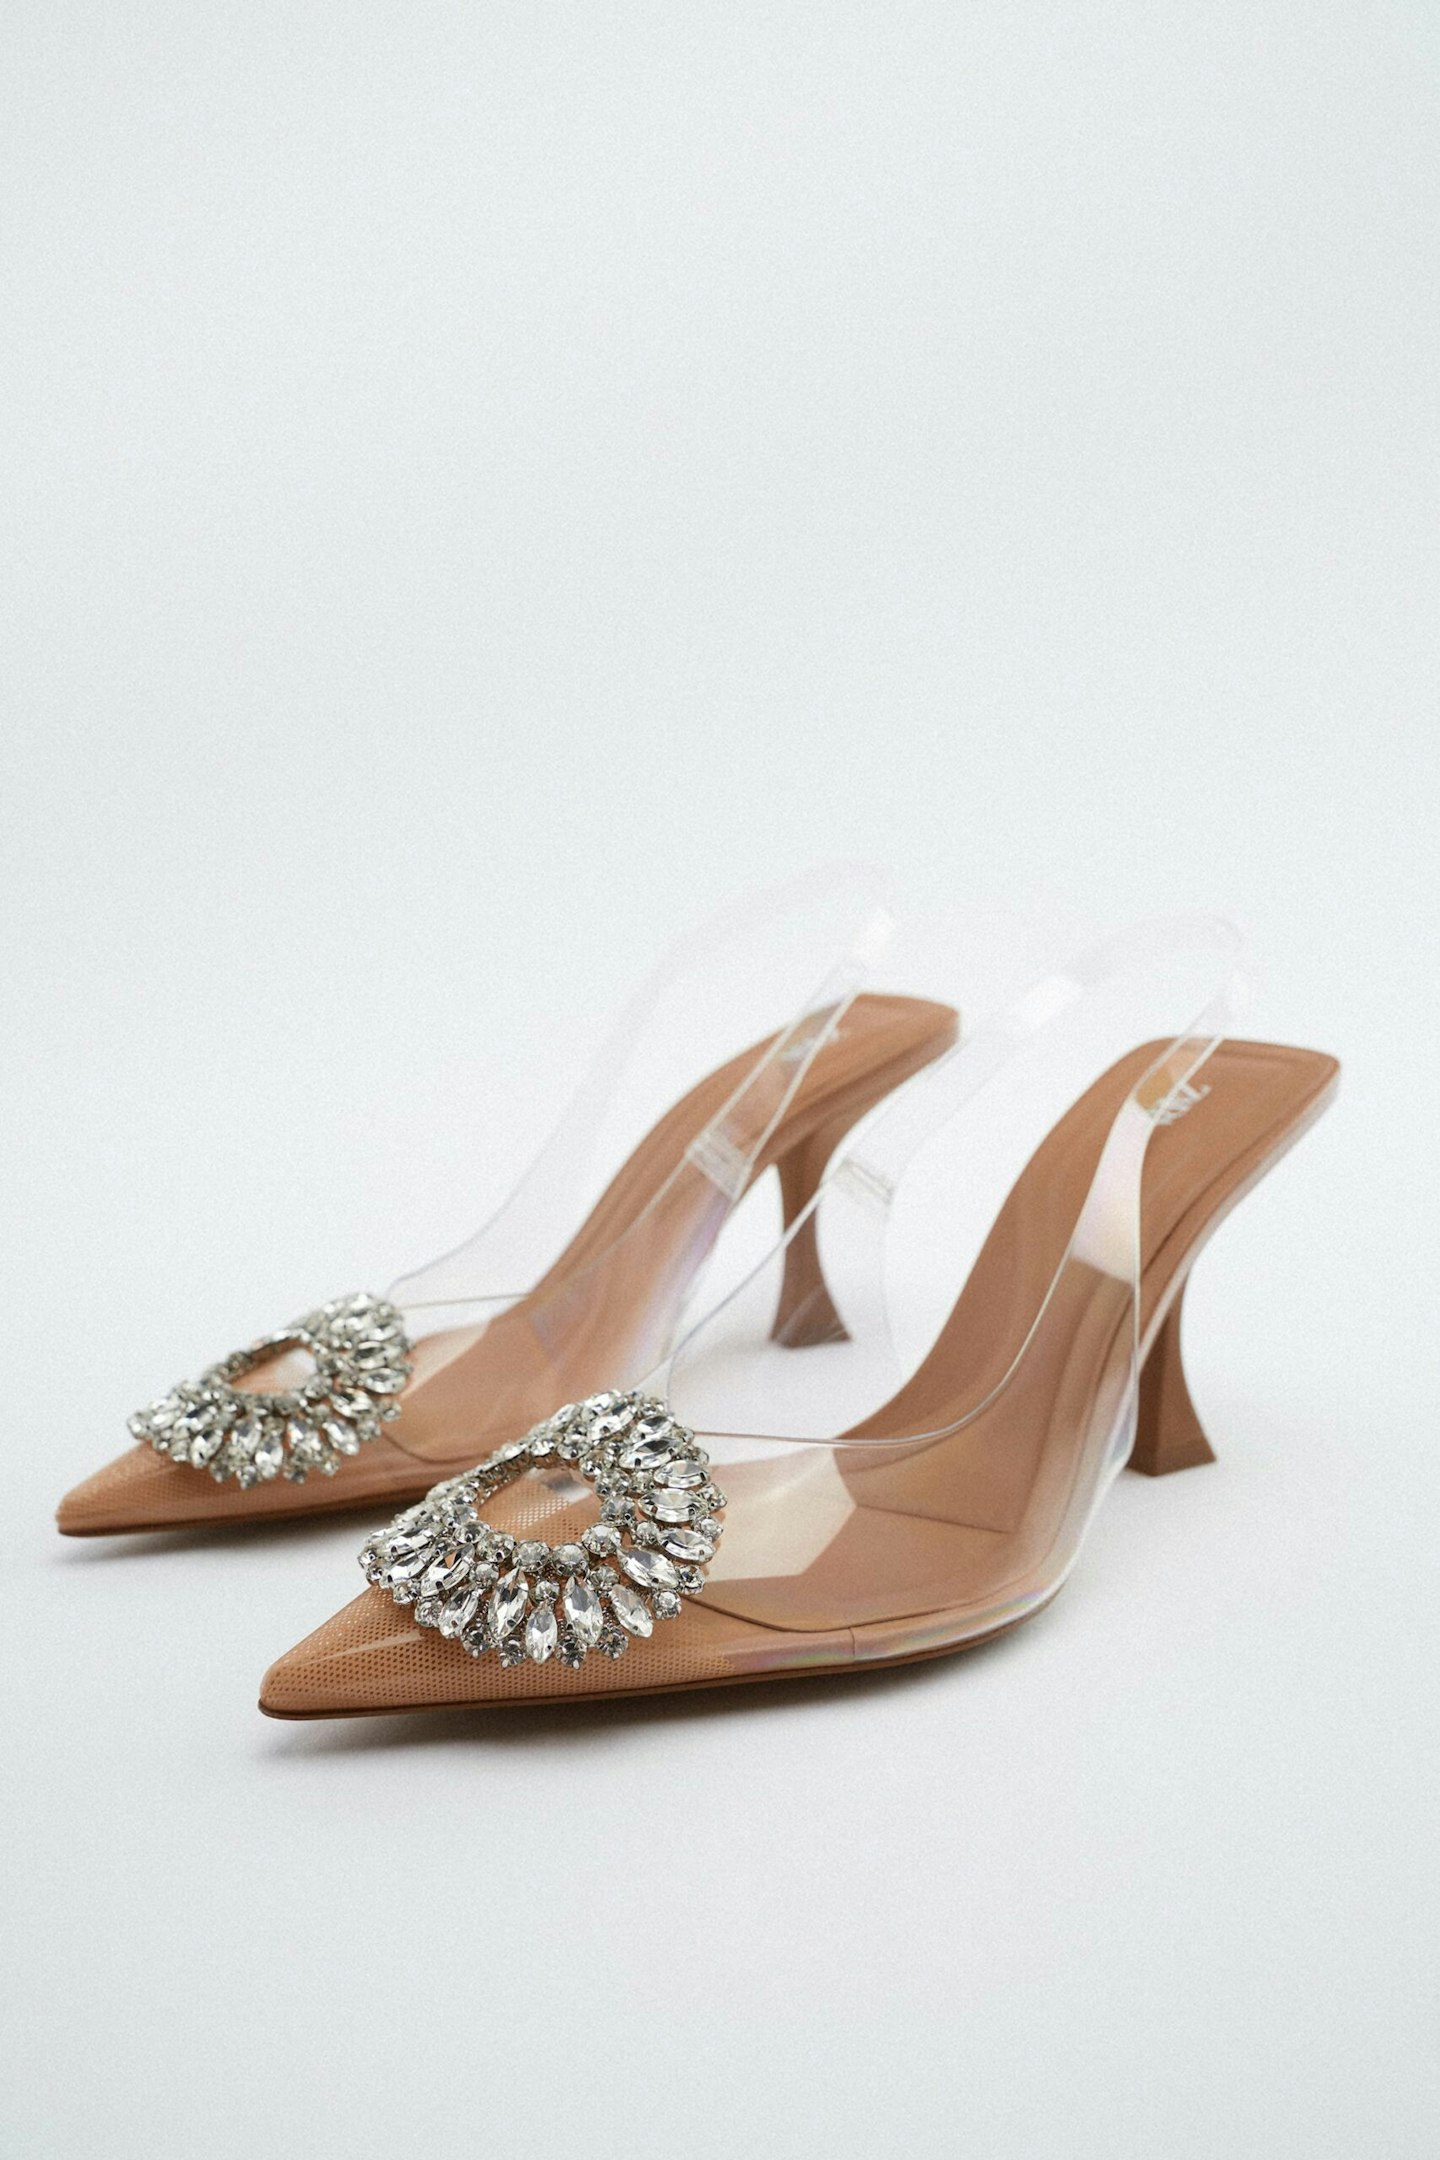 Zara, Embellished Vinyl High Heel Shoes